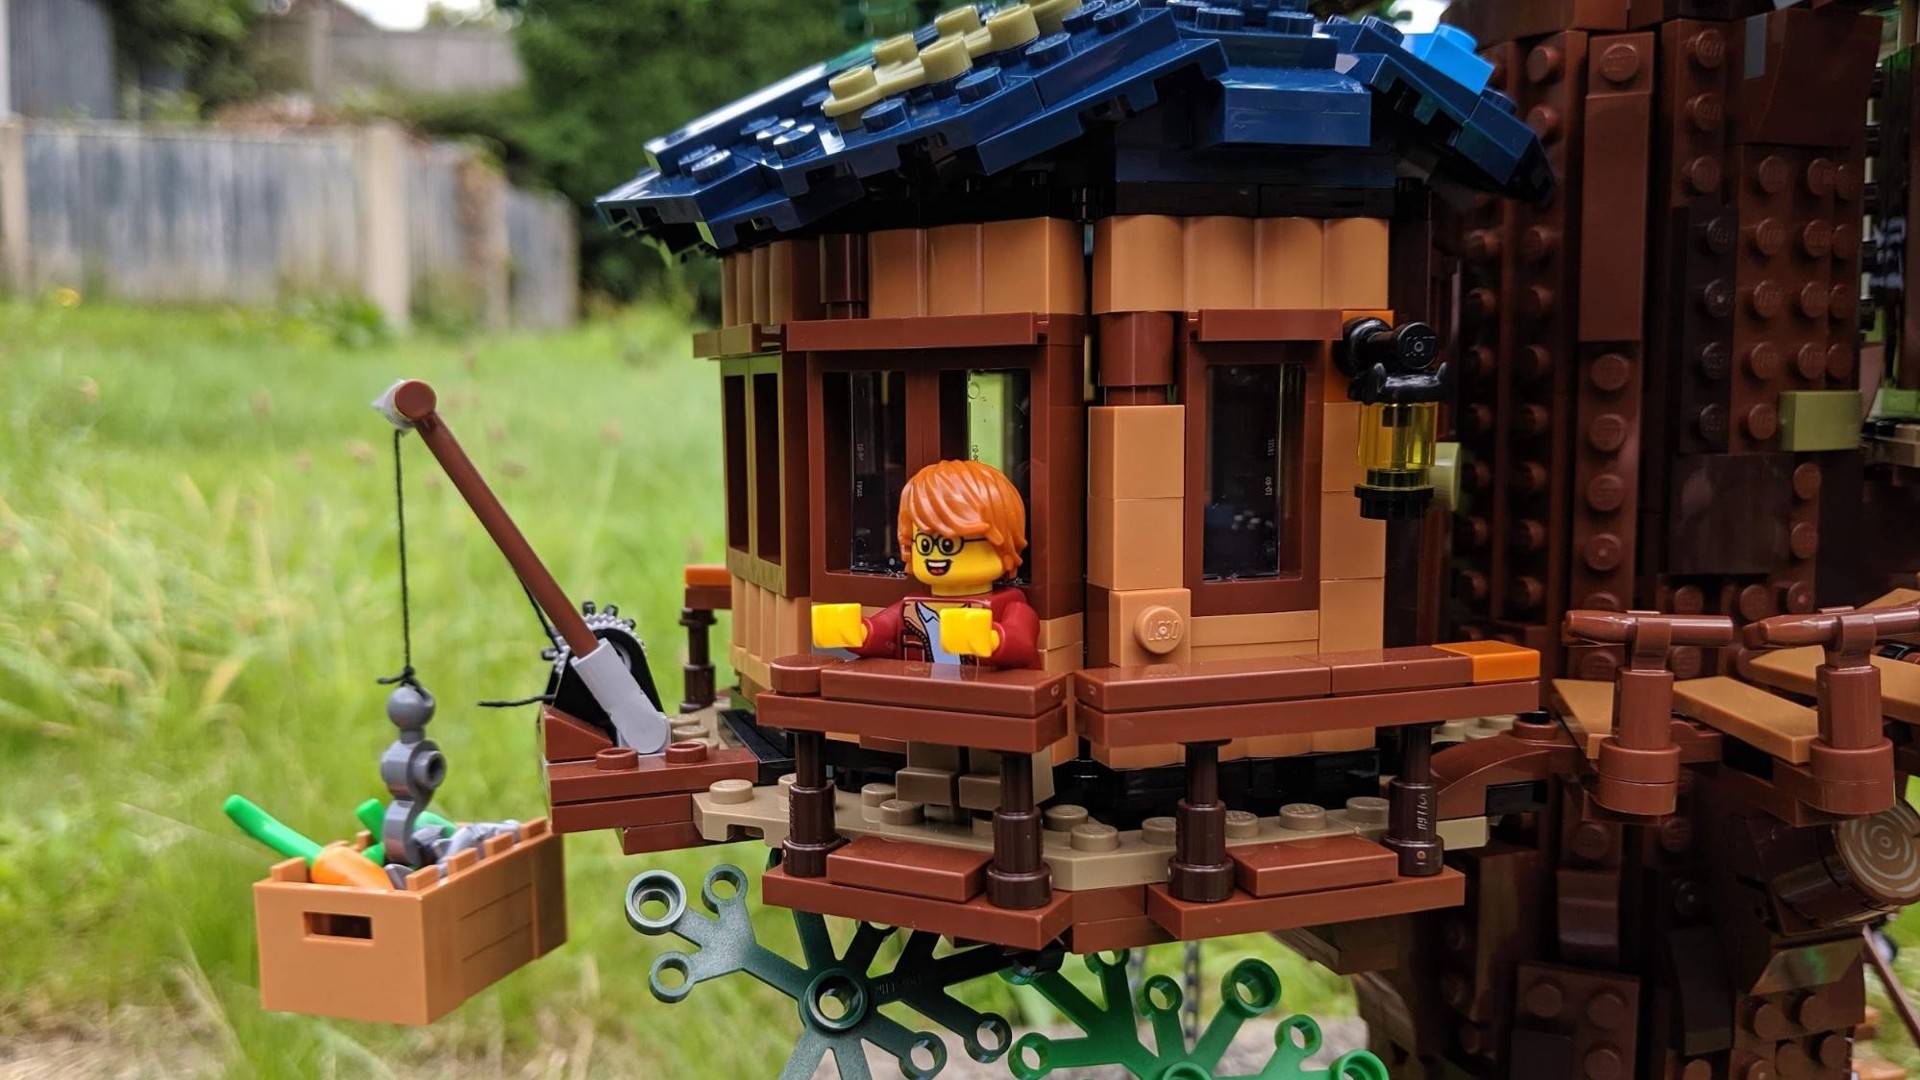 Lego Ideas Tree House 21318 - close up of Lego man using winch on tree house.